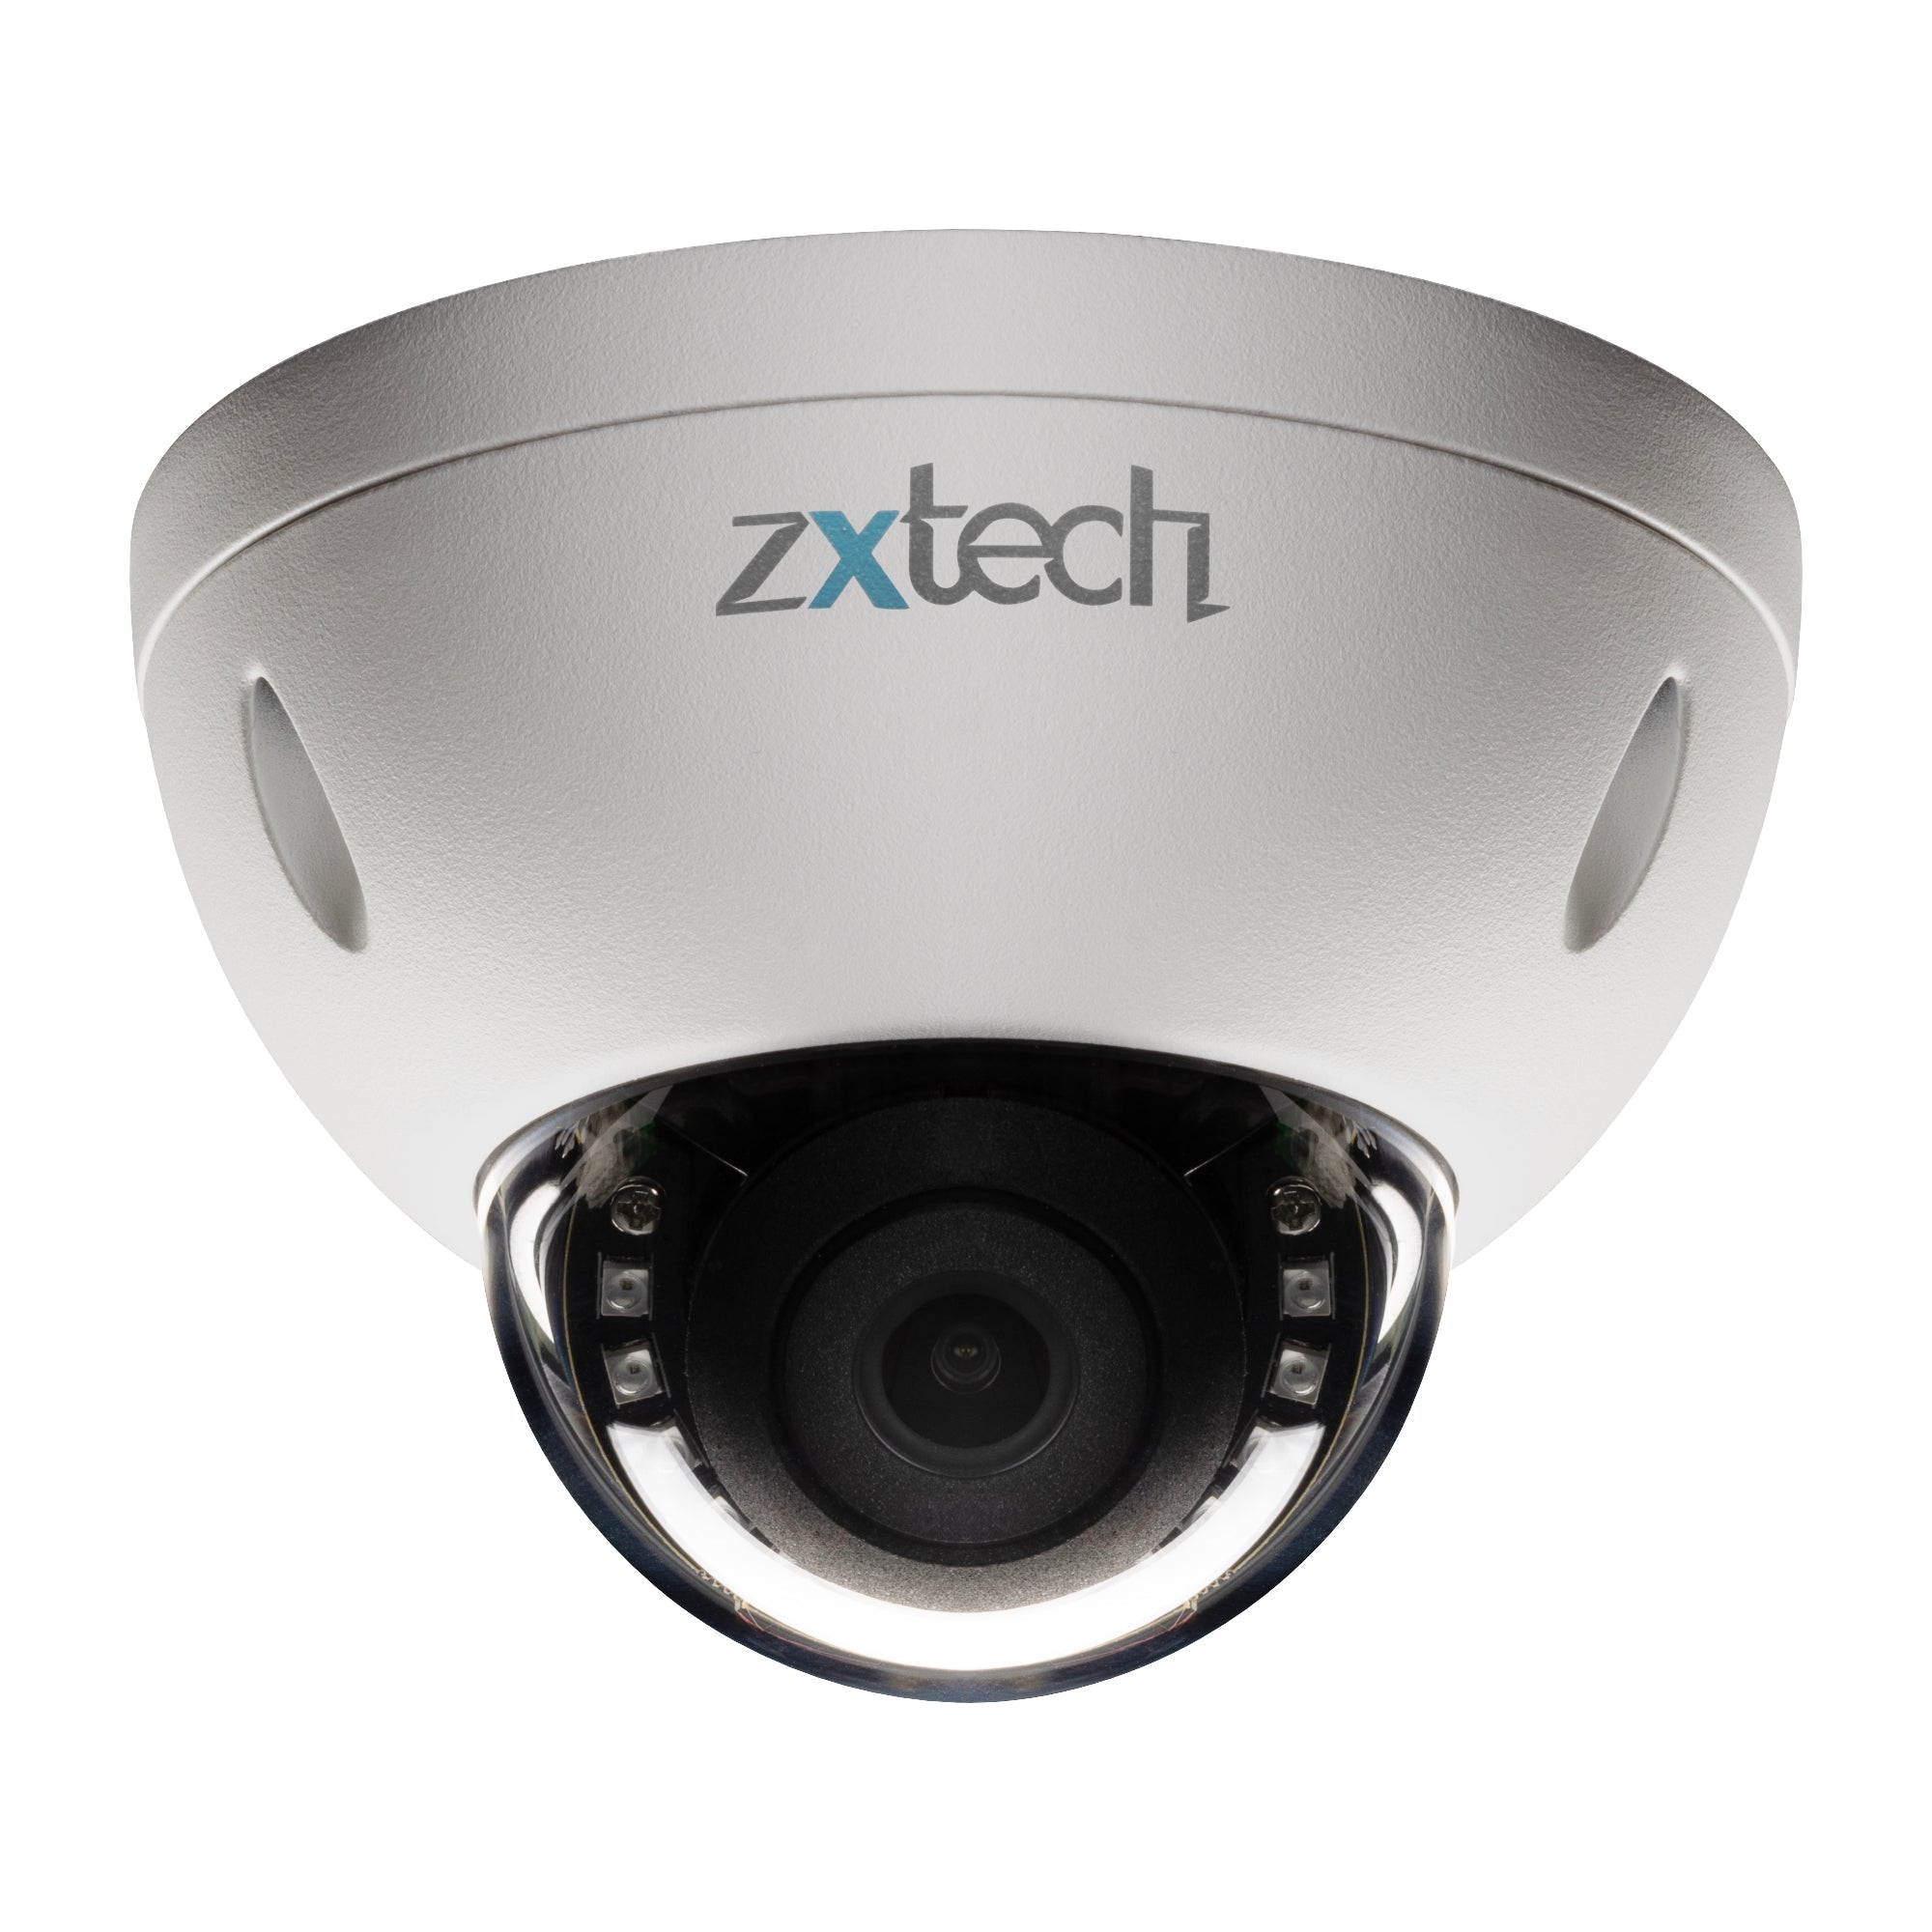 Zxtech IK10 4K CCTV System - 1 x IP PoE Cameras Face Detection Outdoor Sony Starvis Enhanced Night Vision  | IK1A4Z